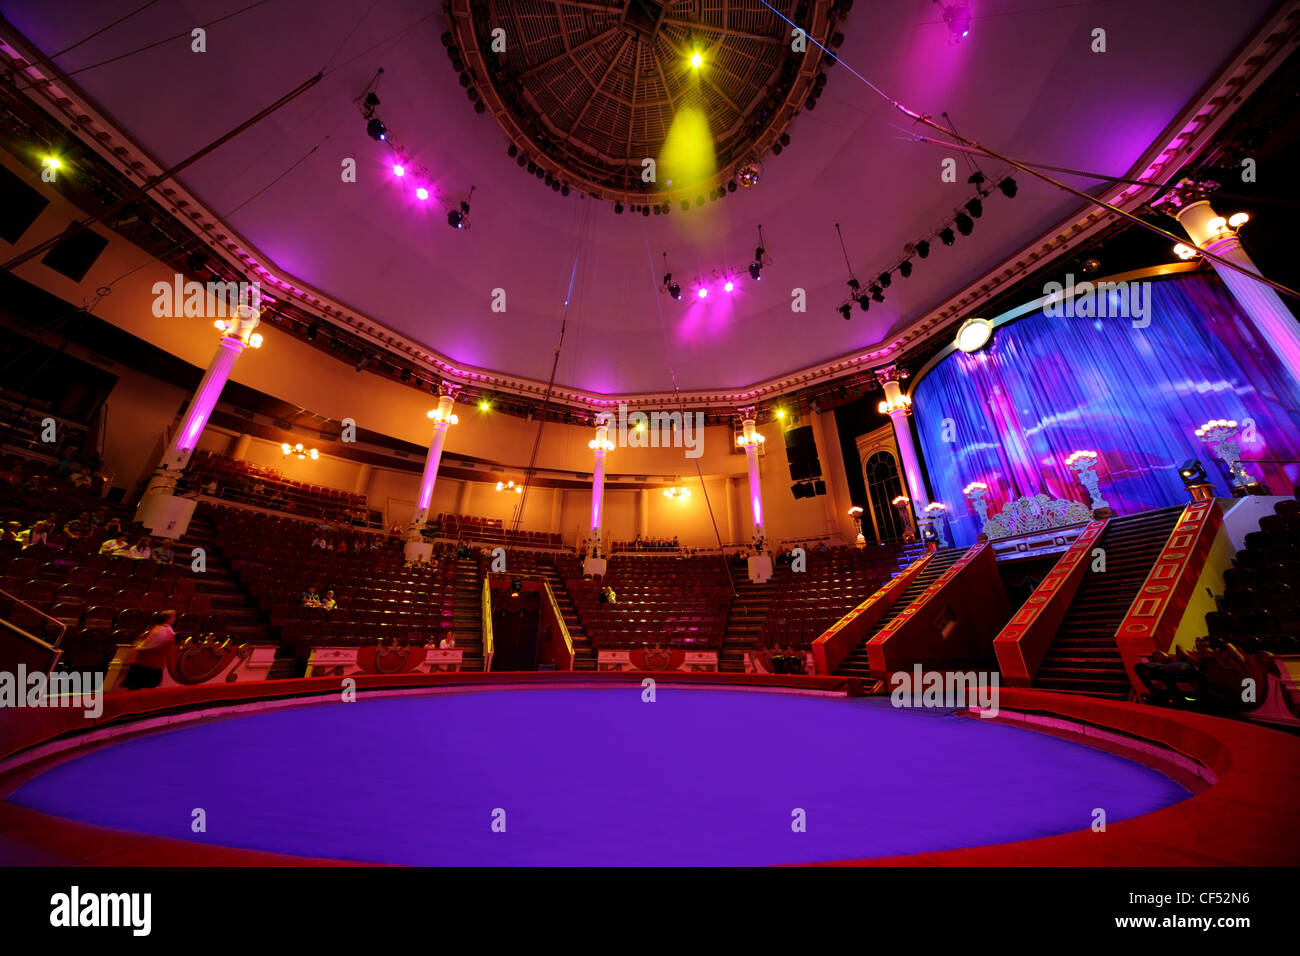 Círculo arena de circo lámparas de luz púrpura vista general sobre techo Foto de stock